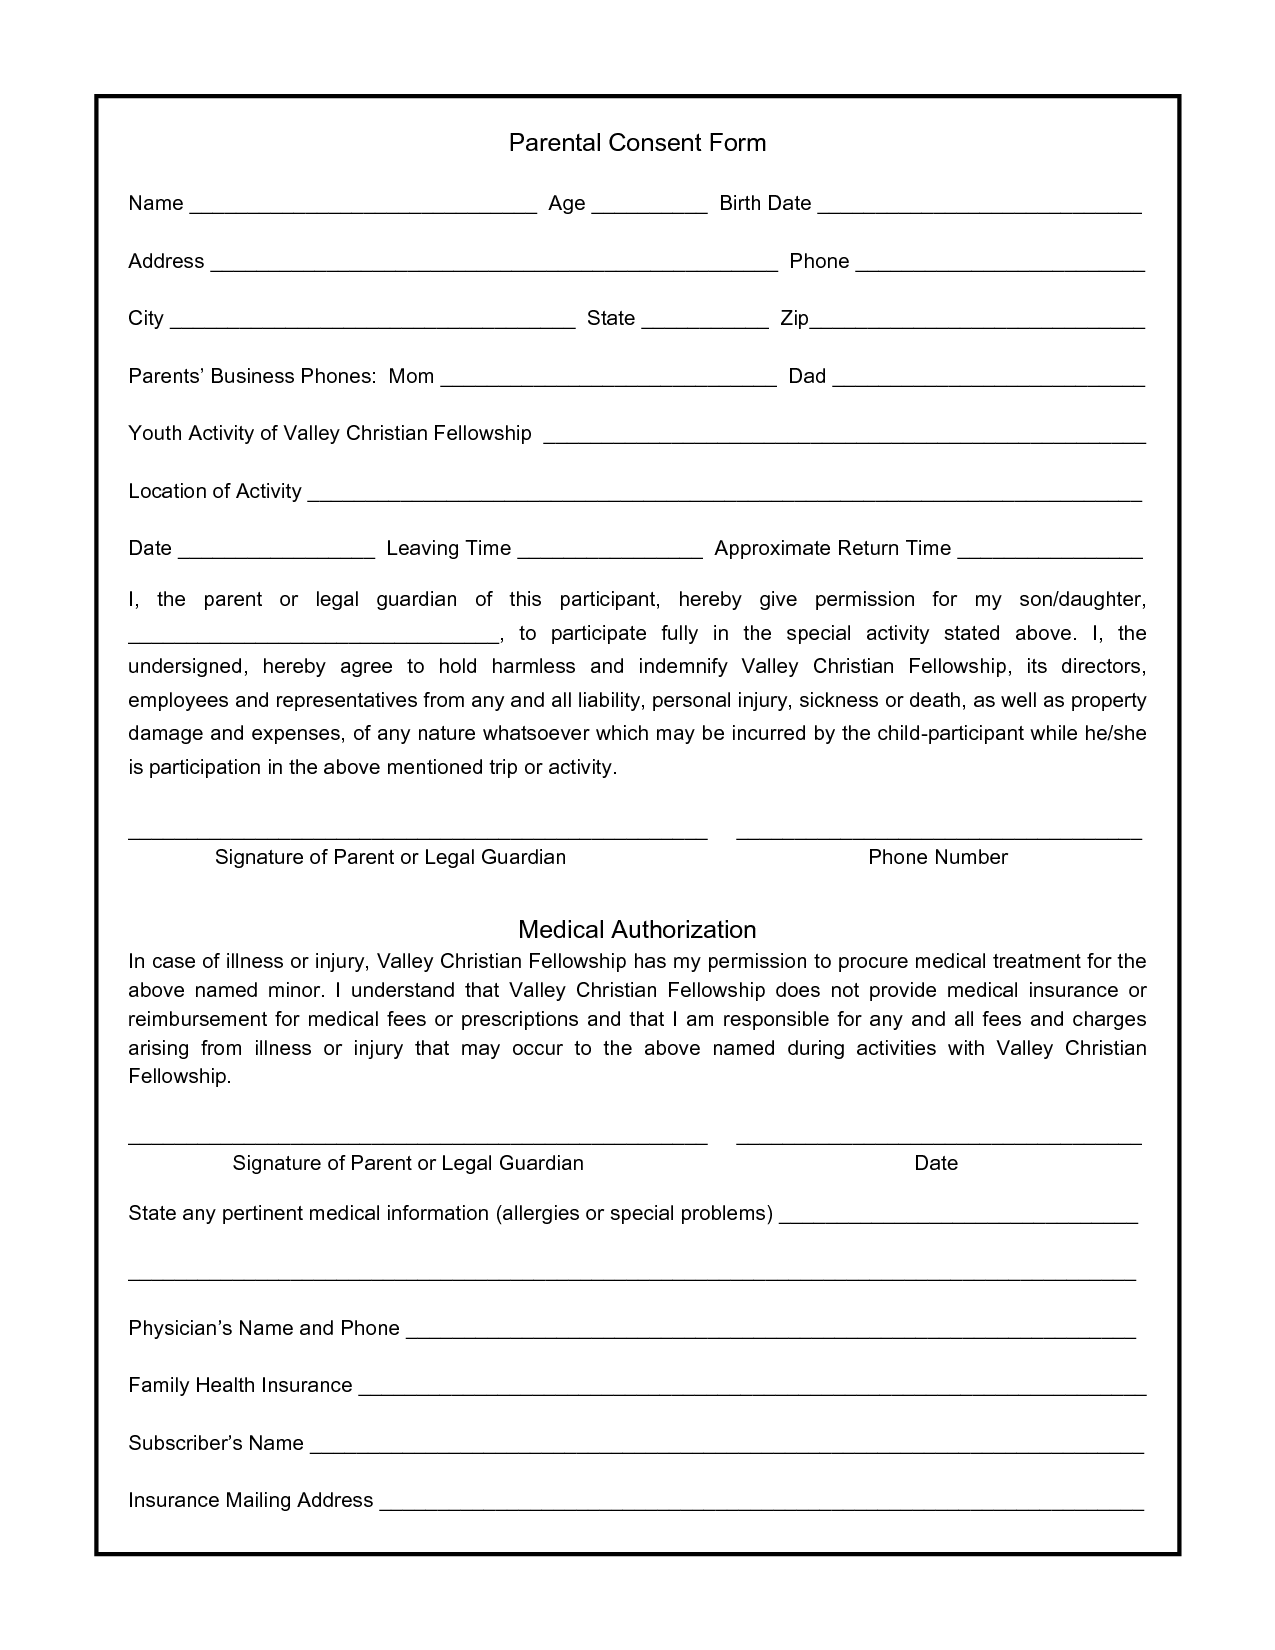 Parental Consent Form Free Printable Documents